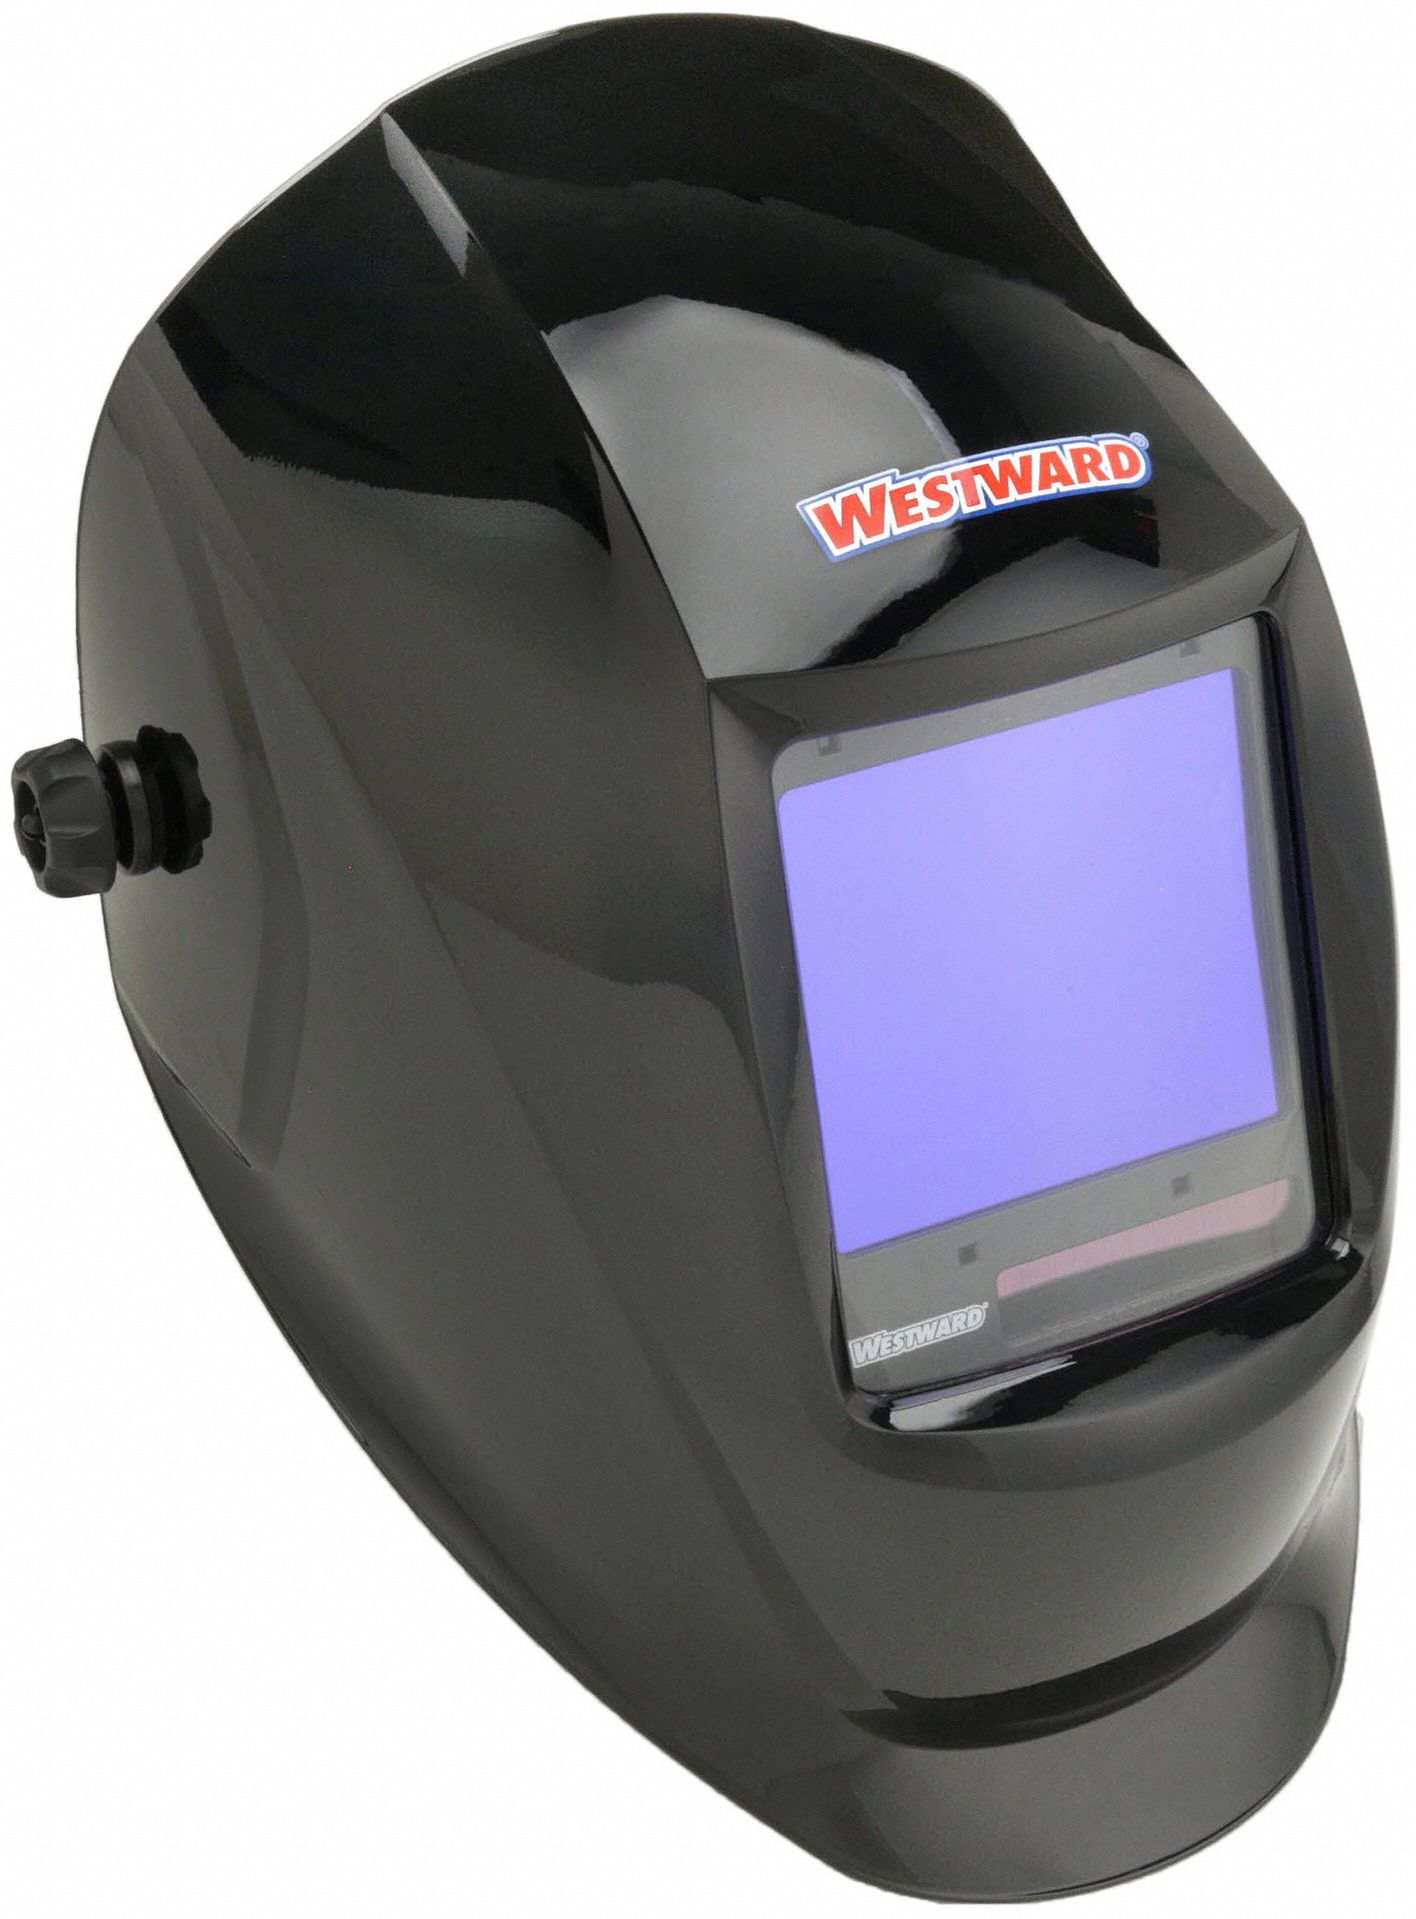 WESTWARD, Auto-Darkening, 4 Arc Sensors, Welding Helmet - 33N557